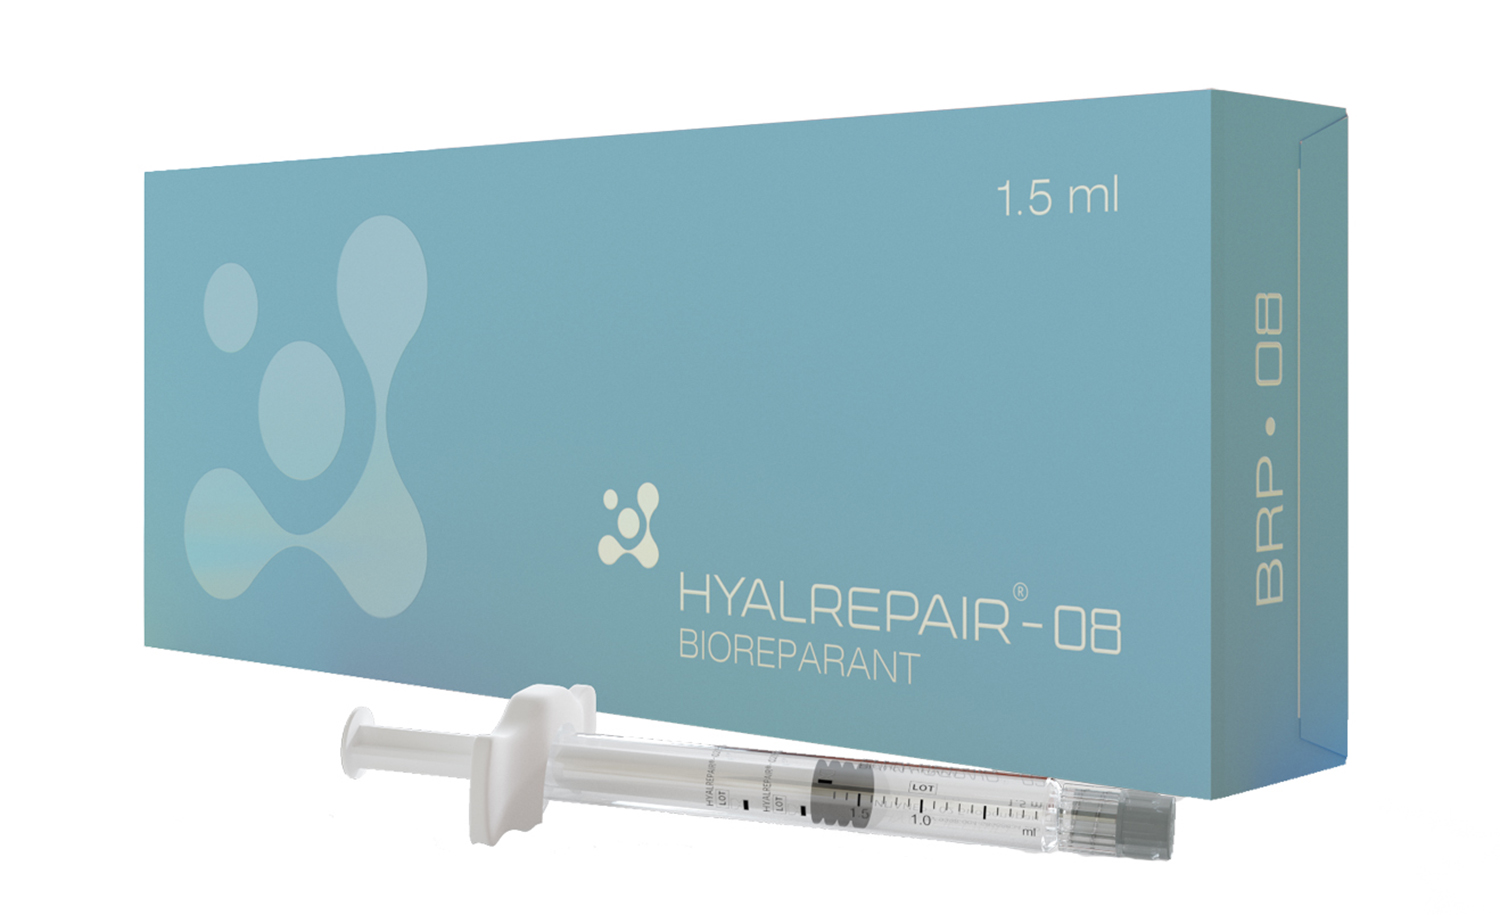 Hyalrepair-08 Bioreparant